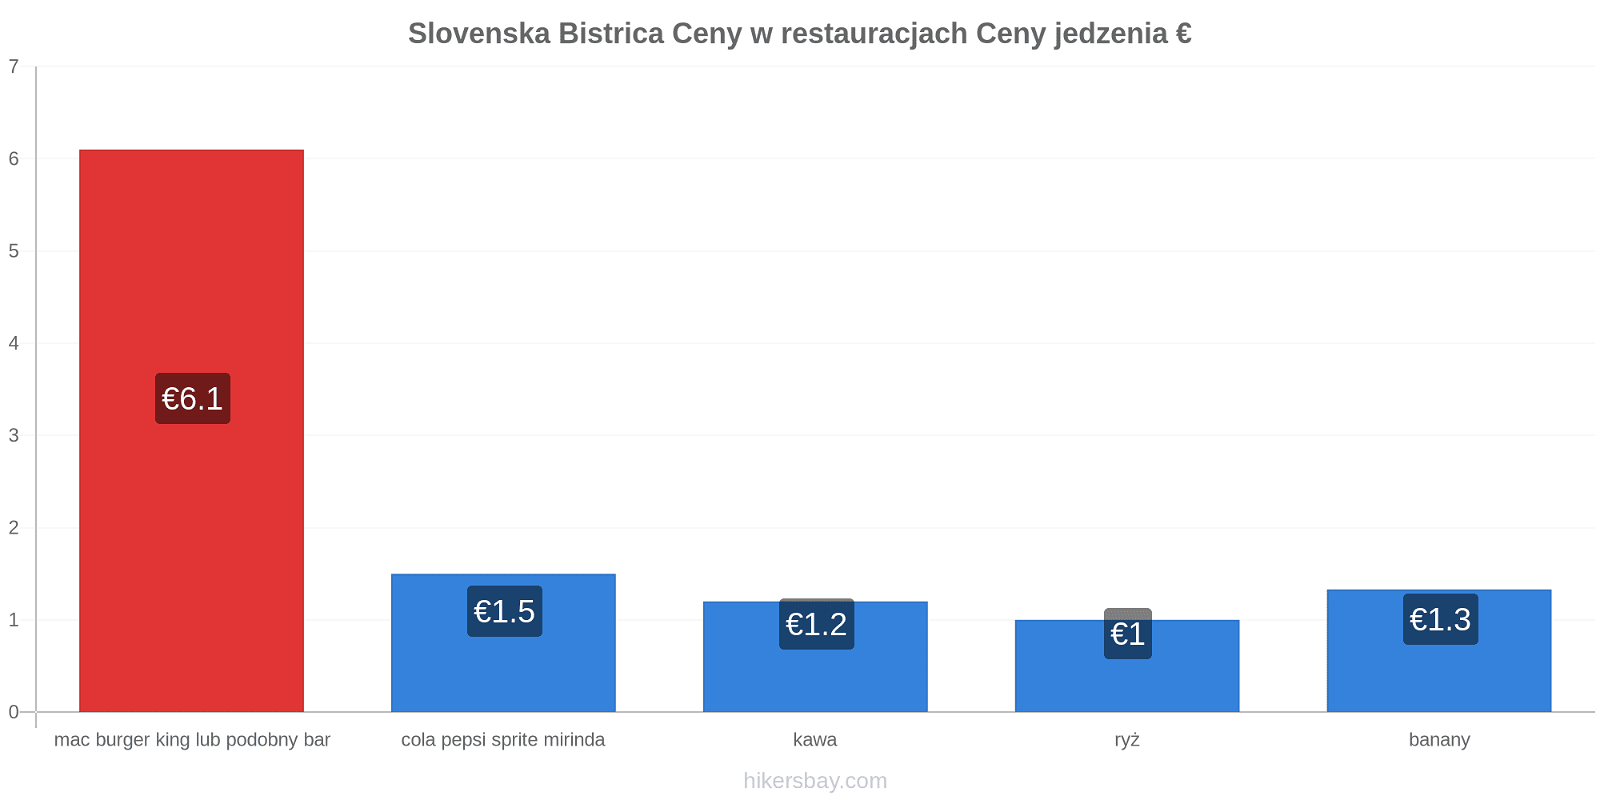 Slovenska Bistrica zmiany cen hikersbay.com